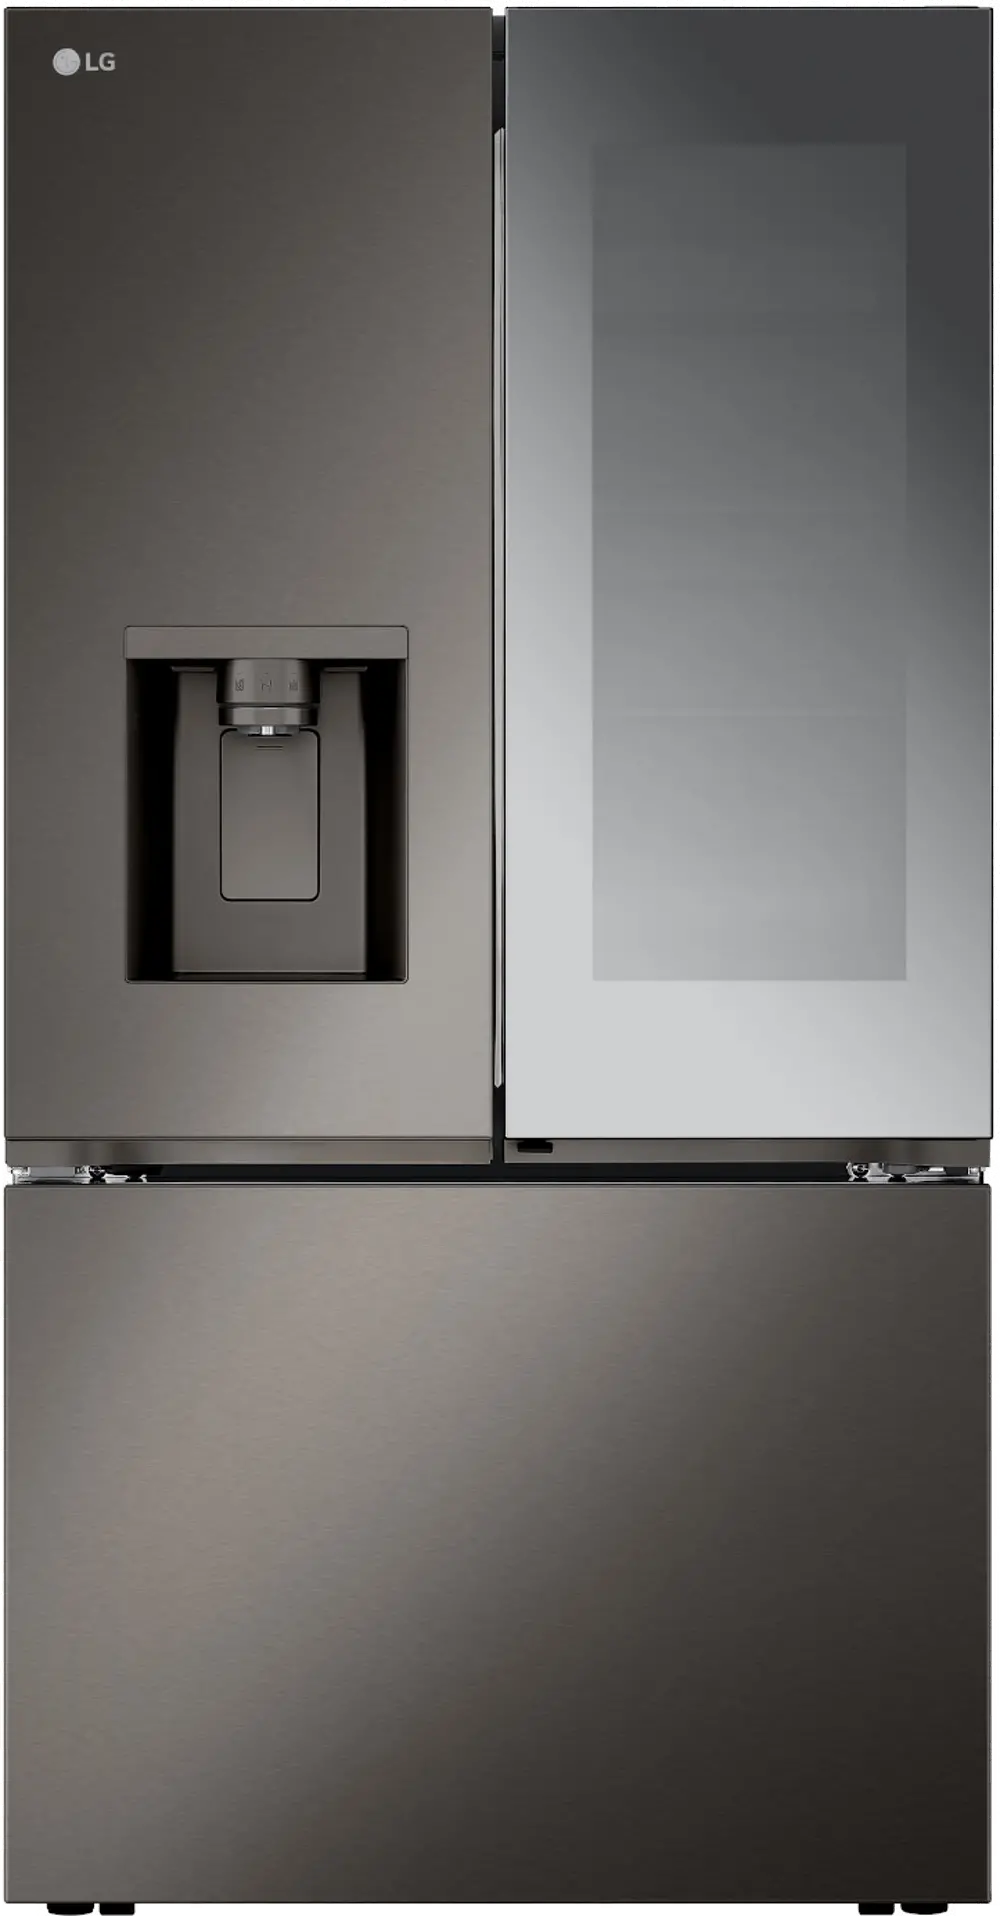 LRYKC2606D LG 26 cu ft InstaView® French Door Refrigerator - Counter Depth Black Stainless Steel-1